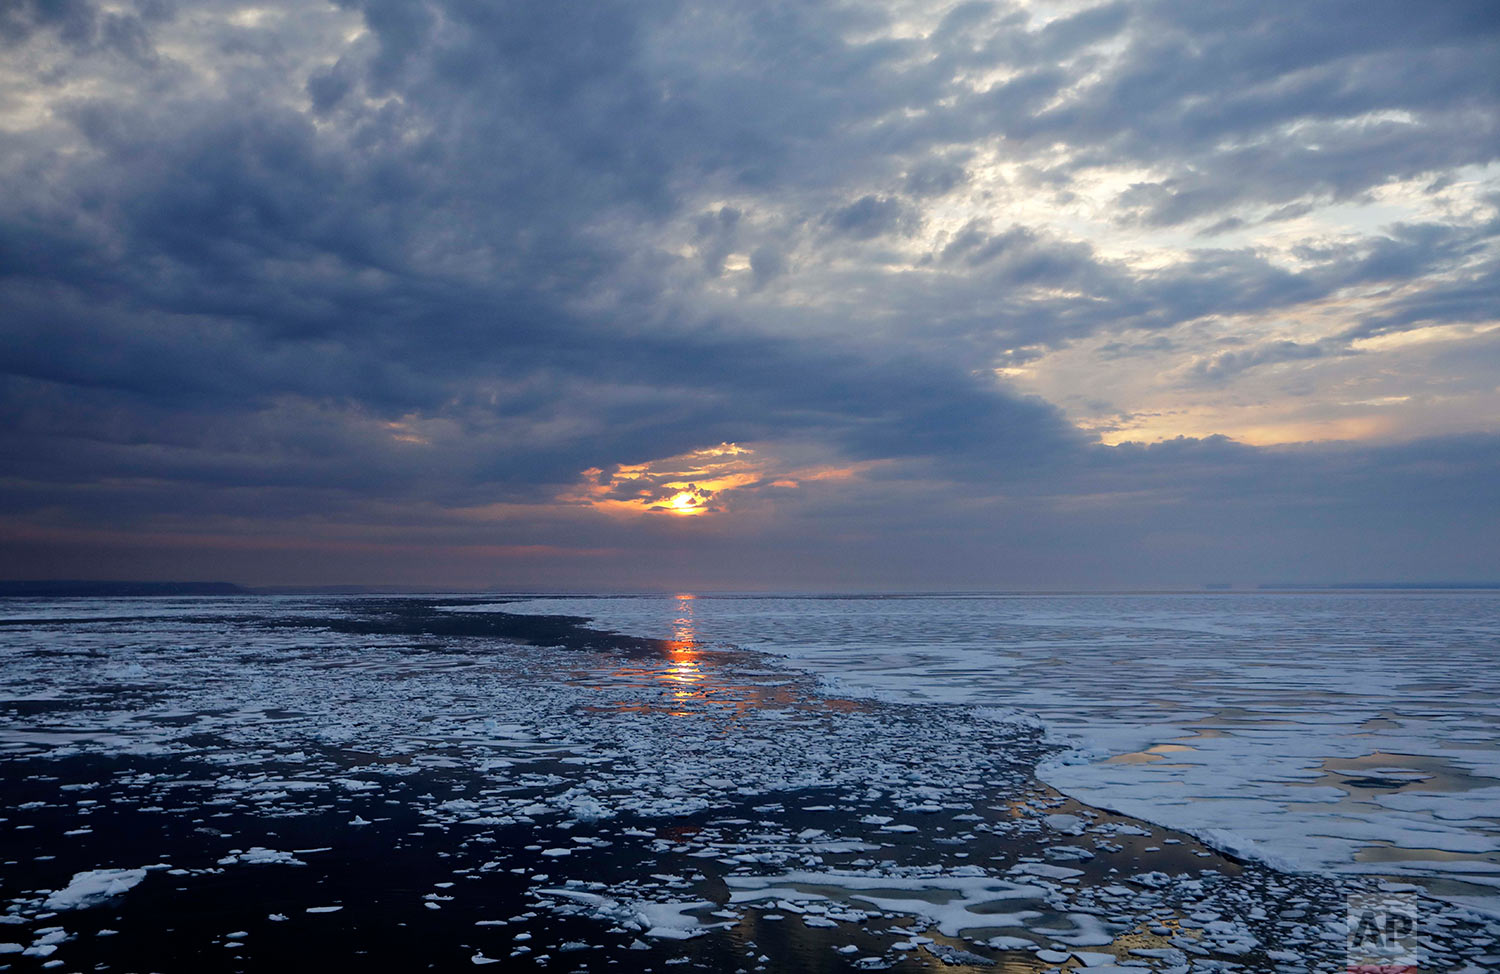 New Arctic The Journey Melting Ice